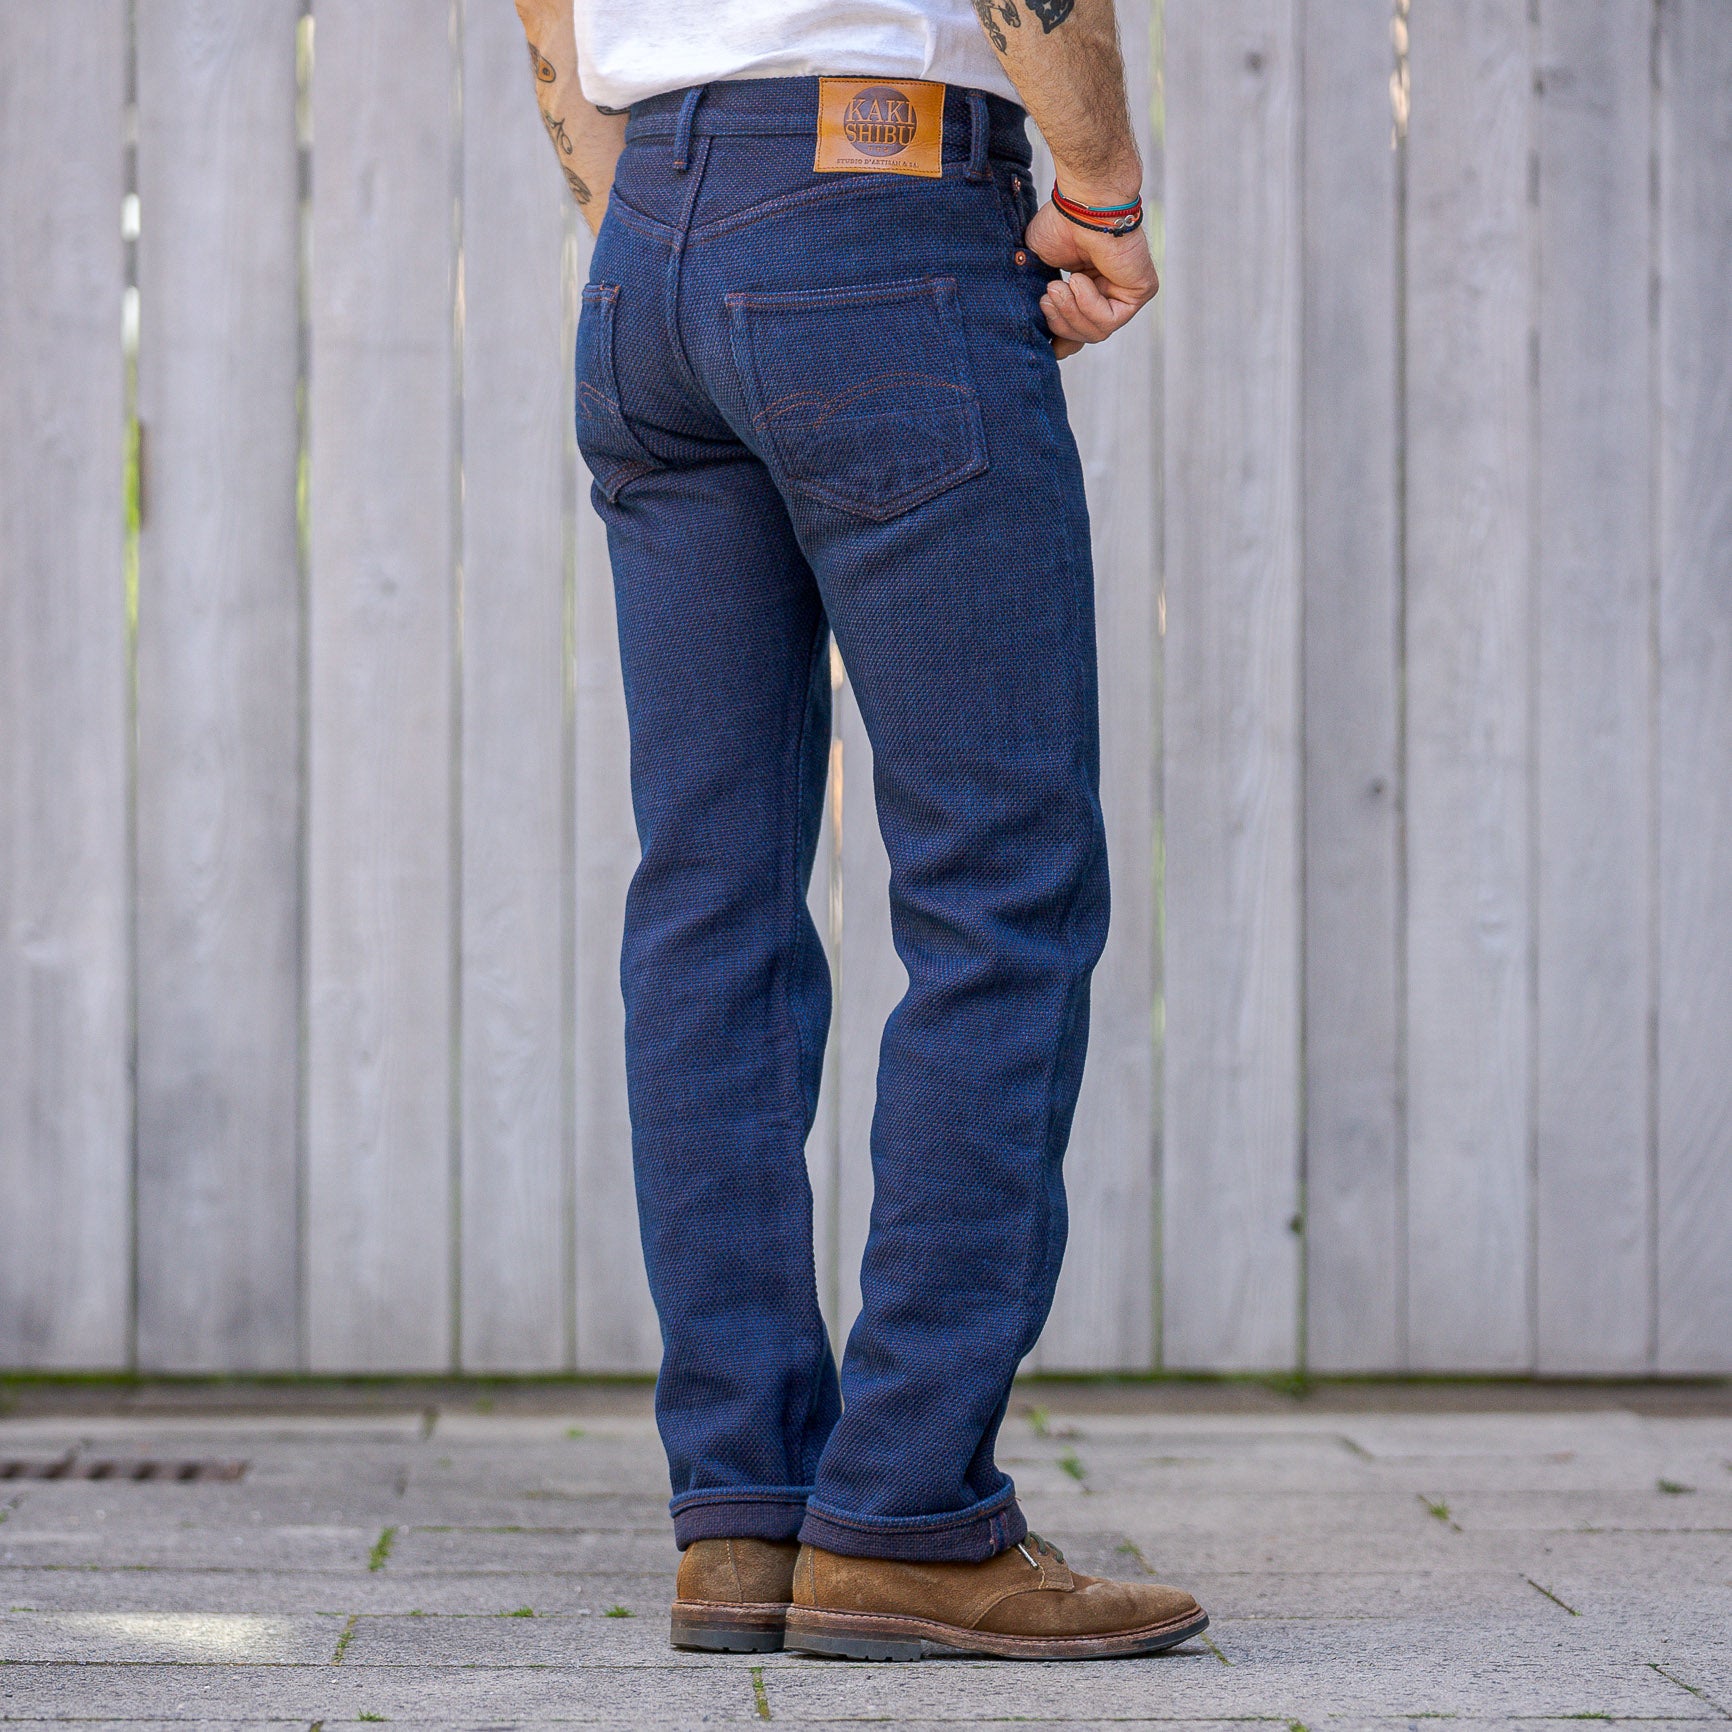 studio dartisan jeans sashiko kakishibu 1831 pants hose indigo persimmon sd selvedge 14oz statement statementstore munich b